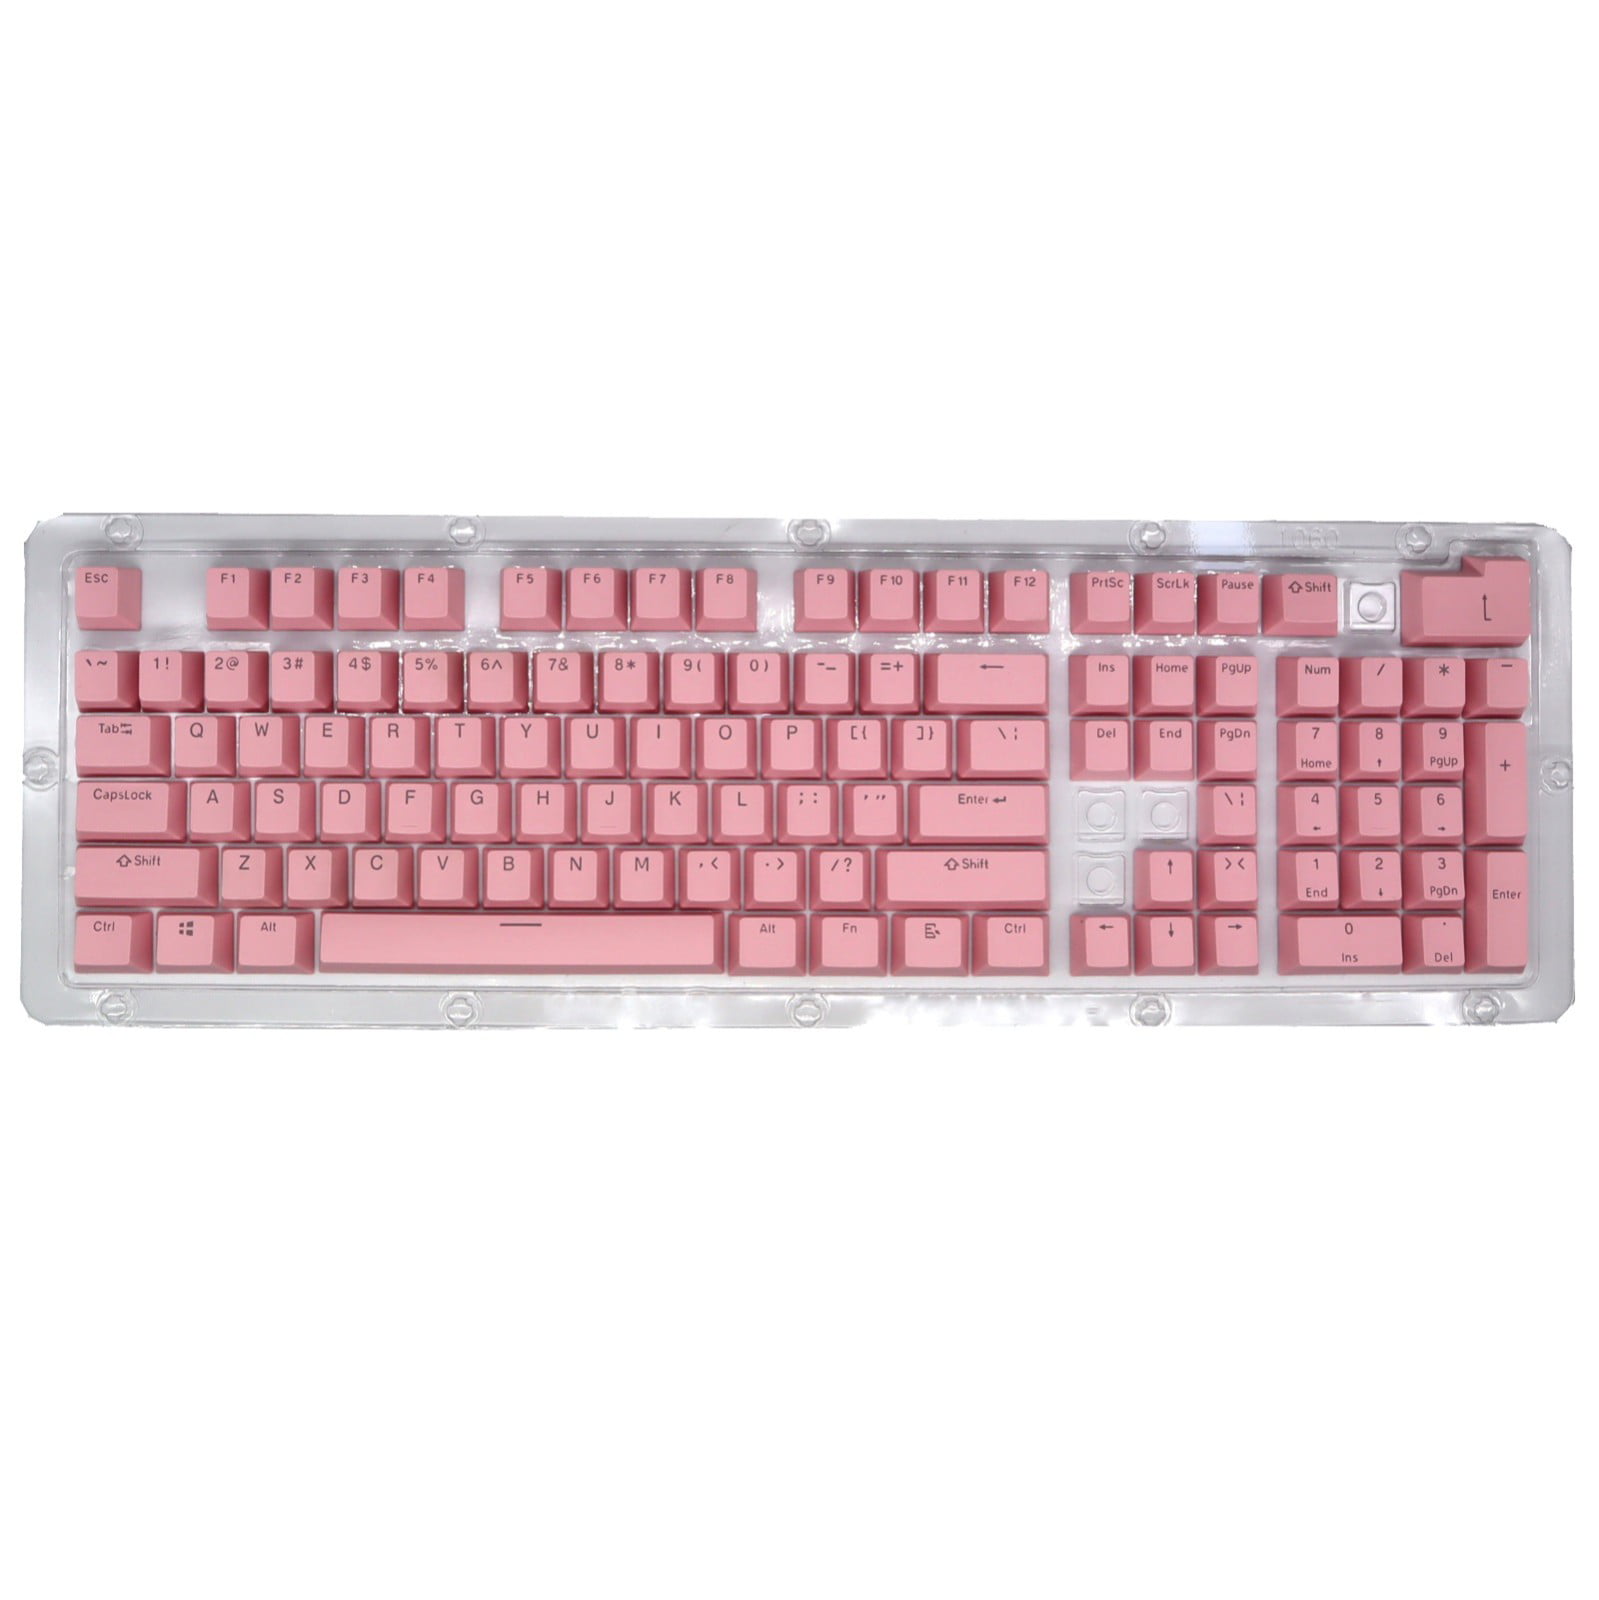 87/104 Keys Pink White Doubleshot PBT Backlit Keycap Key caps ANSI Layout OEM Profile for Cherry MX Gaming Mechanical Keyboard 104 Keys, Pink&White 